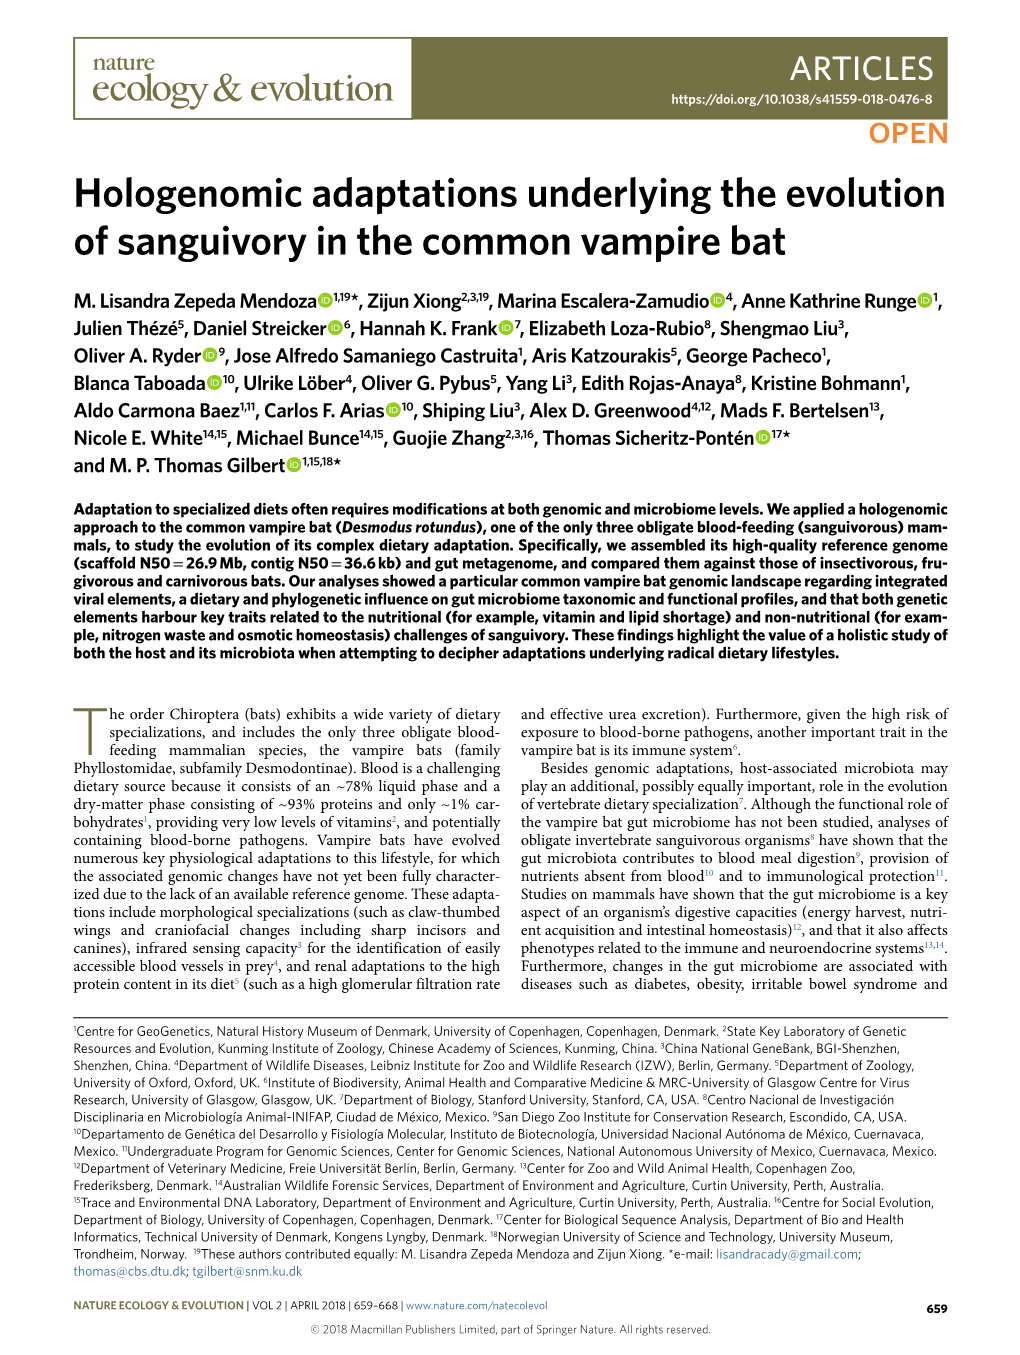 Hologenomic Adaptations Underlying the Evolution of Sanguivory in the Common Vampire Bat